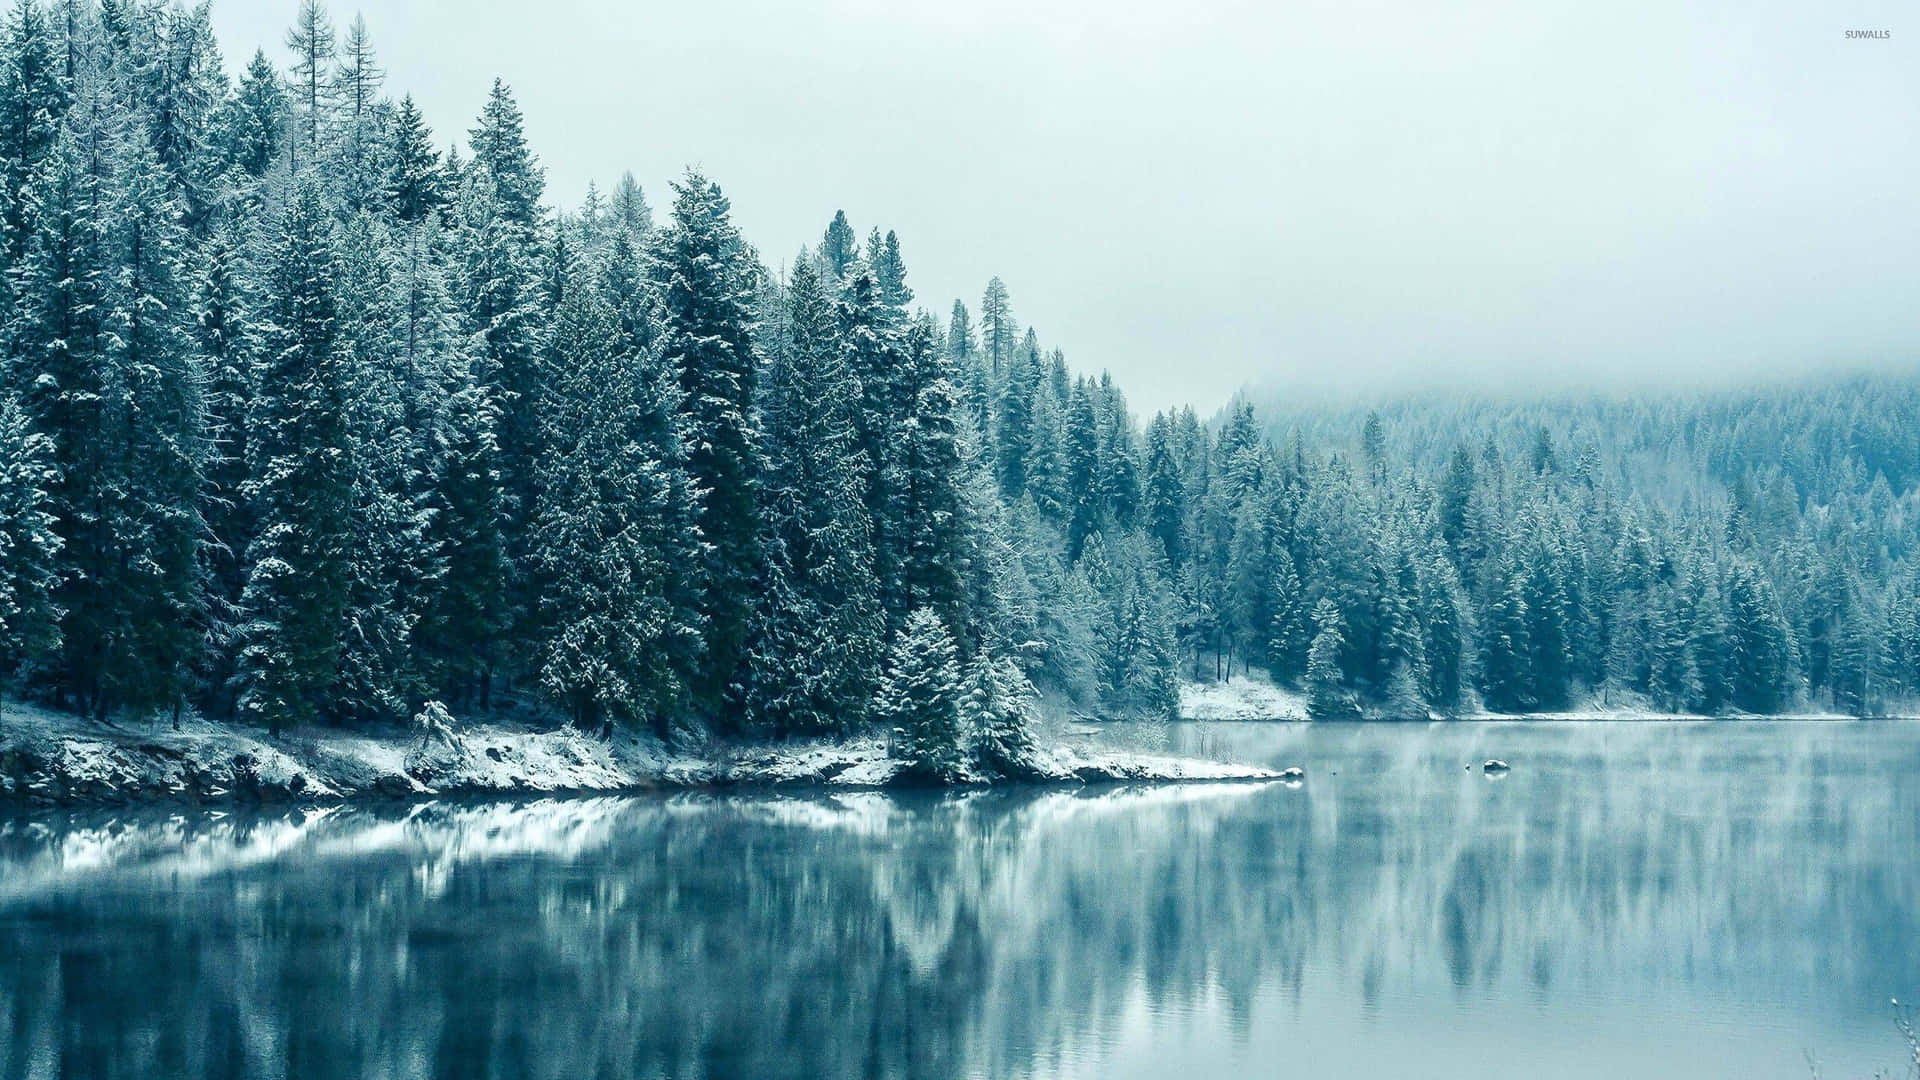 Caption: Serene Snowy Winter Landscape Wallpaper